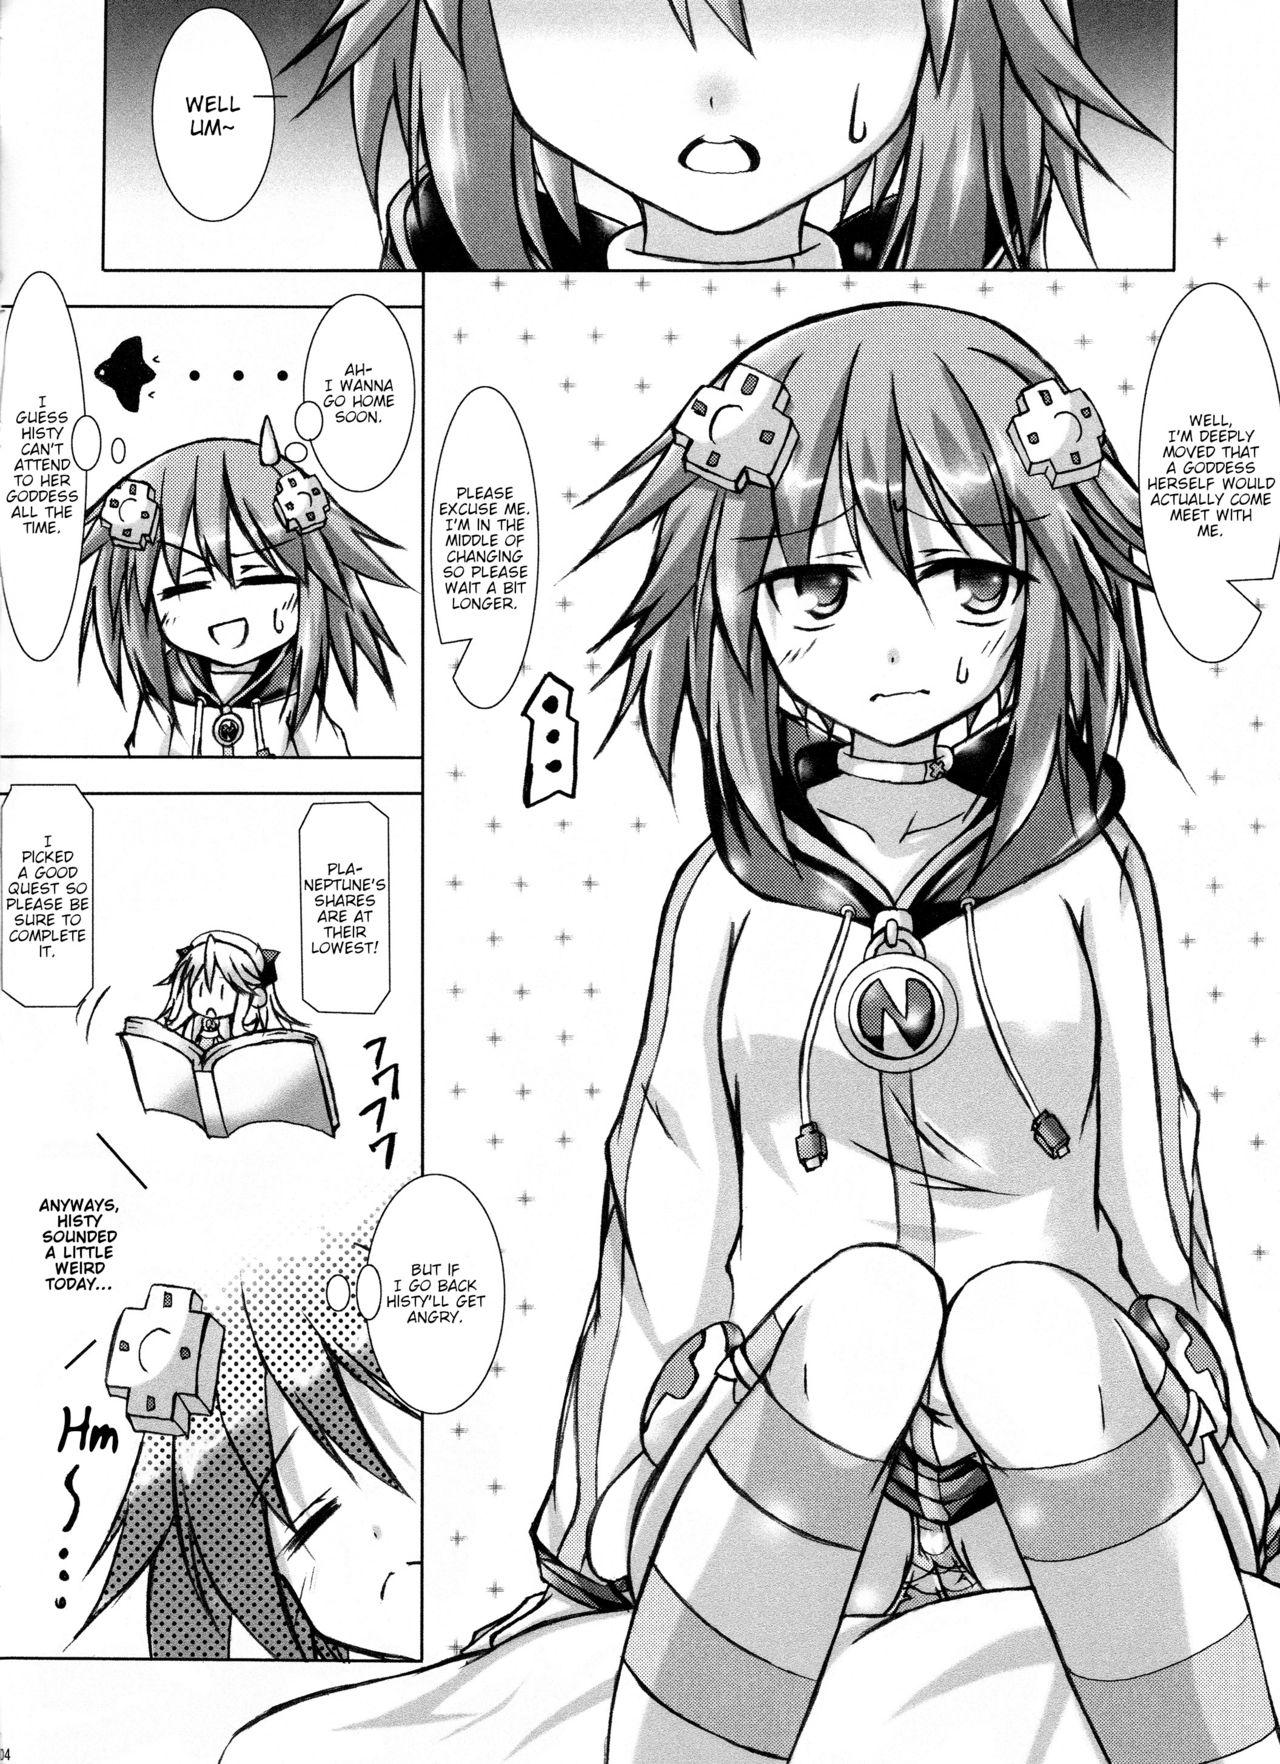 Dress Share Kaifuku no Susume - Hyperdimension neptunia Gay Uncut - Page 4